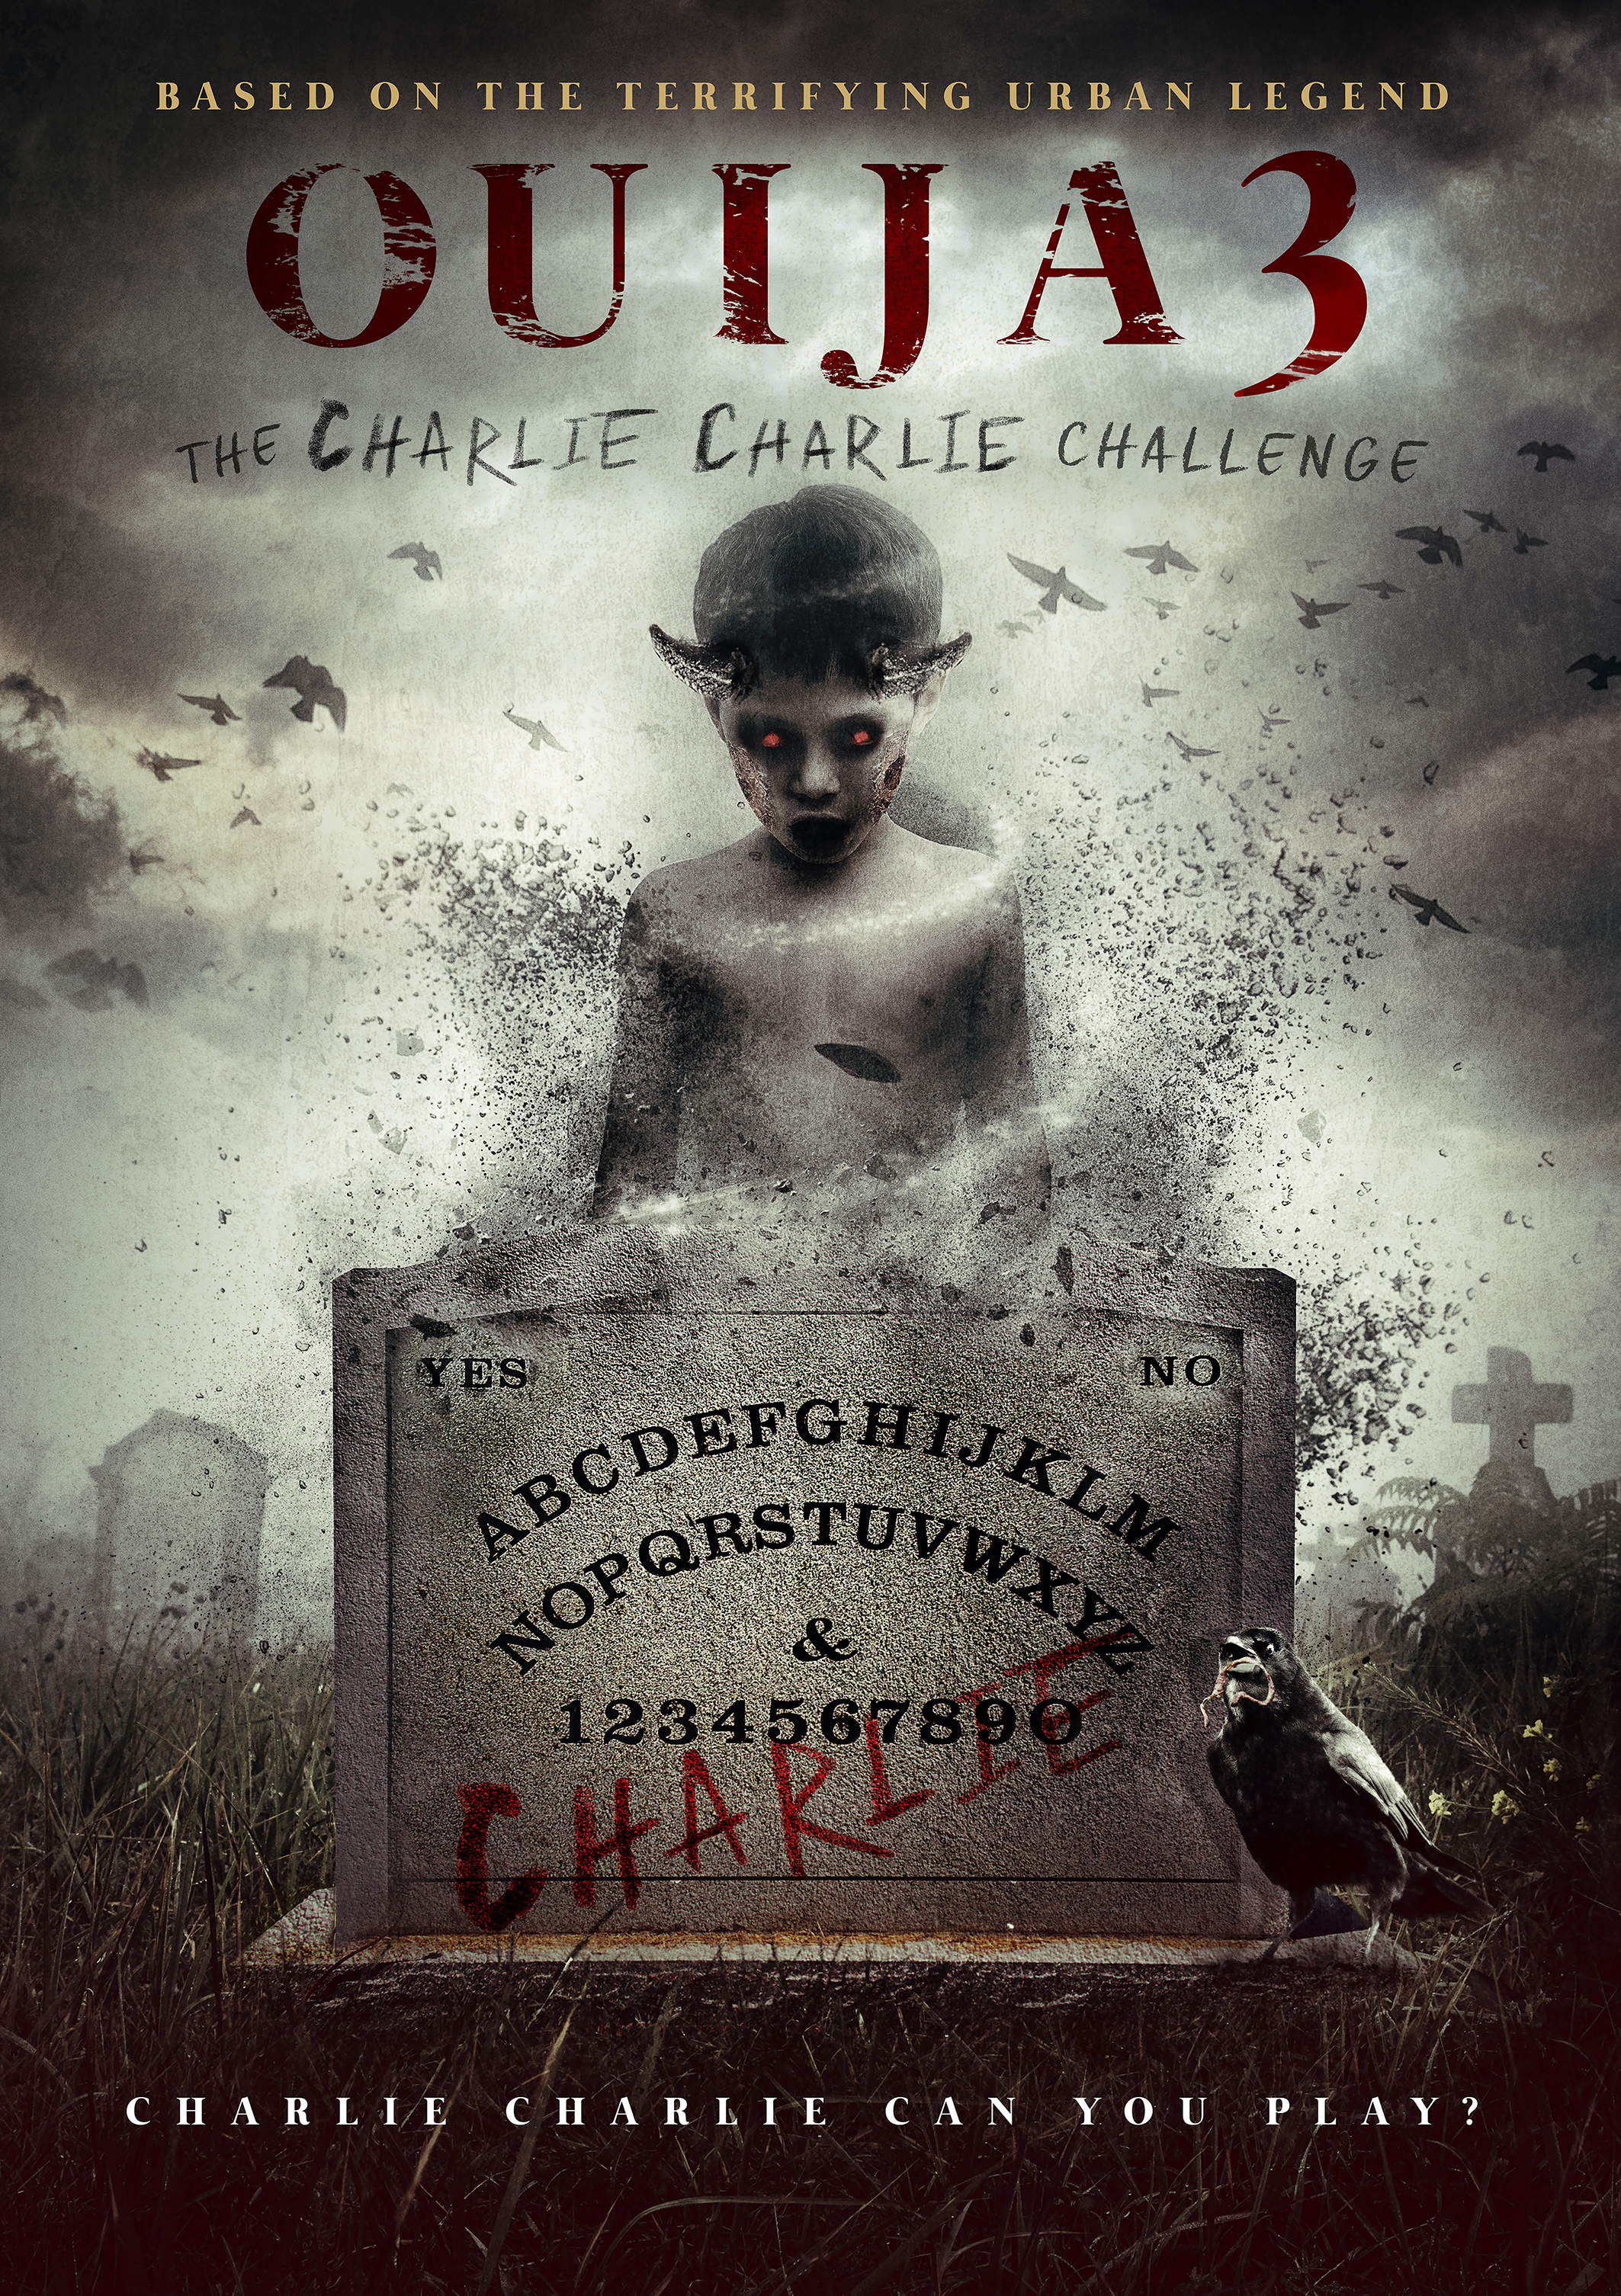 Nonton film Charlie Charlie layarkaca21 indoxx1 ganool online streaming terbaru